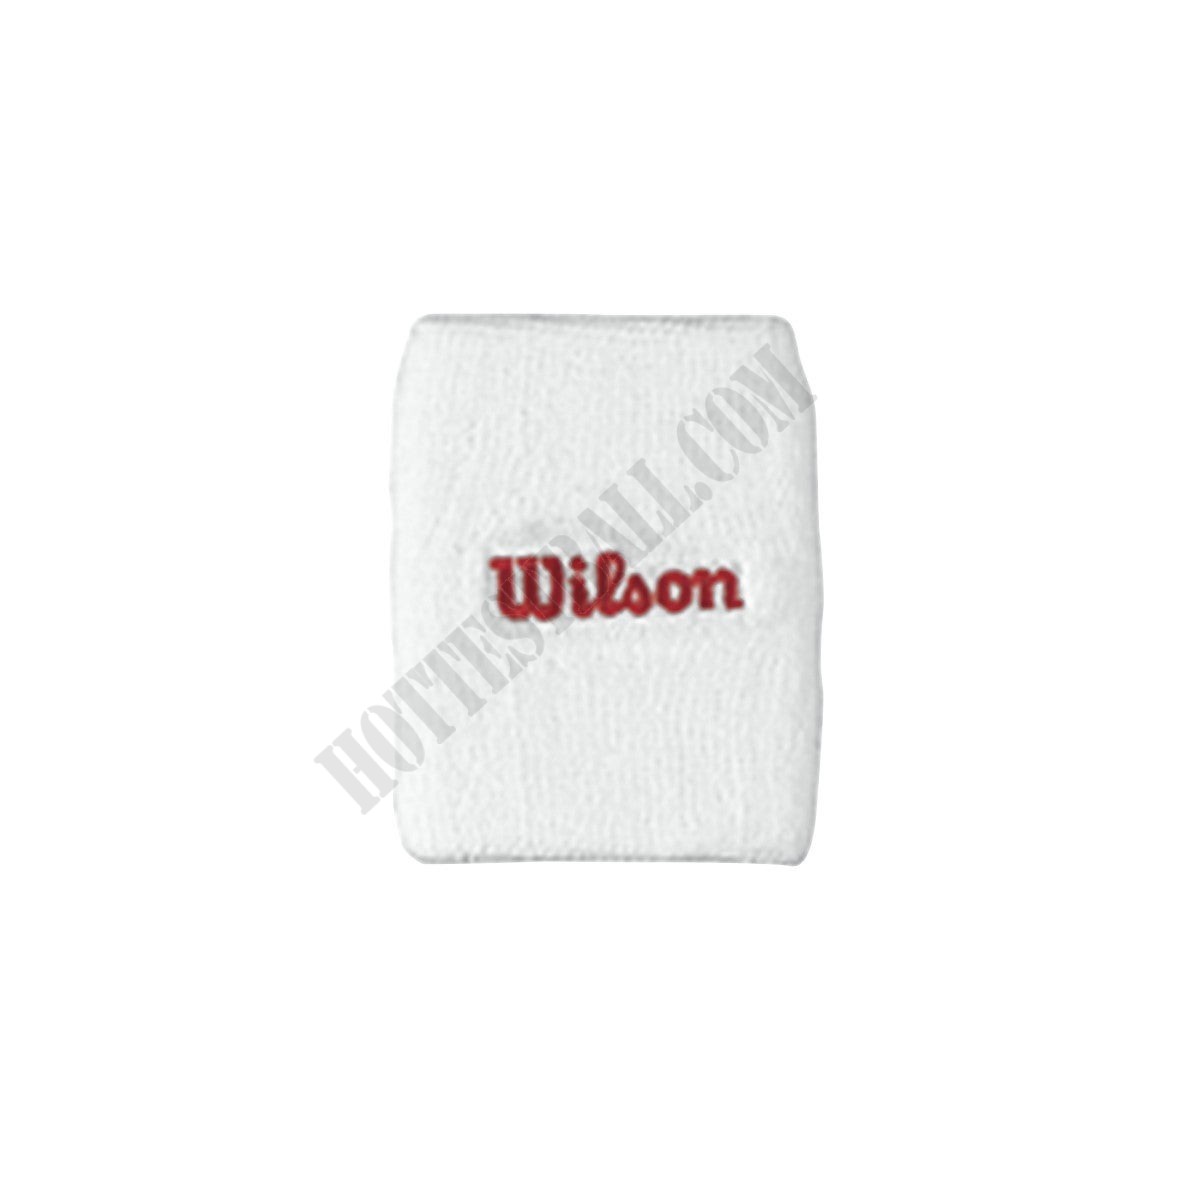 Wilson Double Wristband - Wilson Discount Store - -3